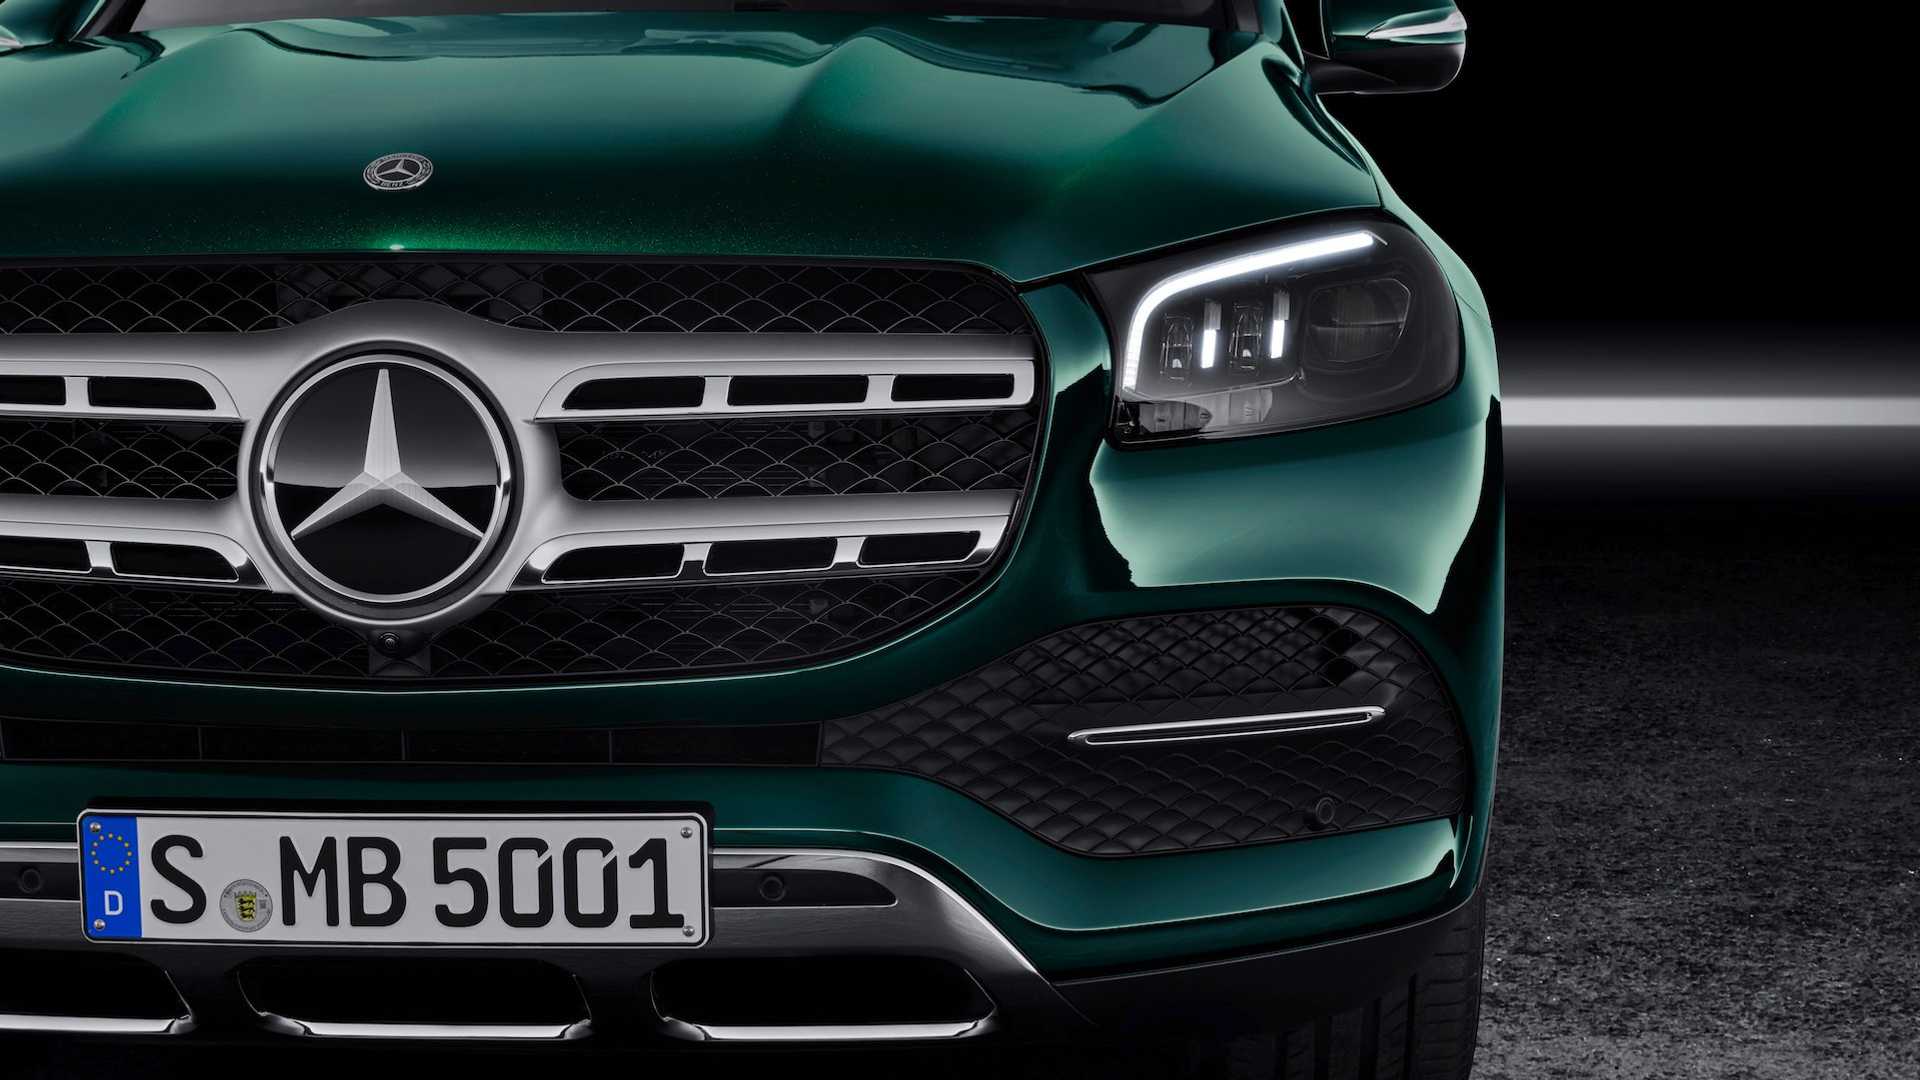 2020 Mercedes-Benz GLS (Color: Emerald Green) Grill Wallpapers #83 of 95